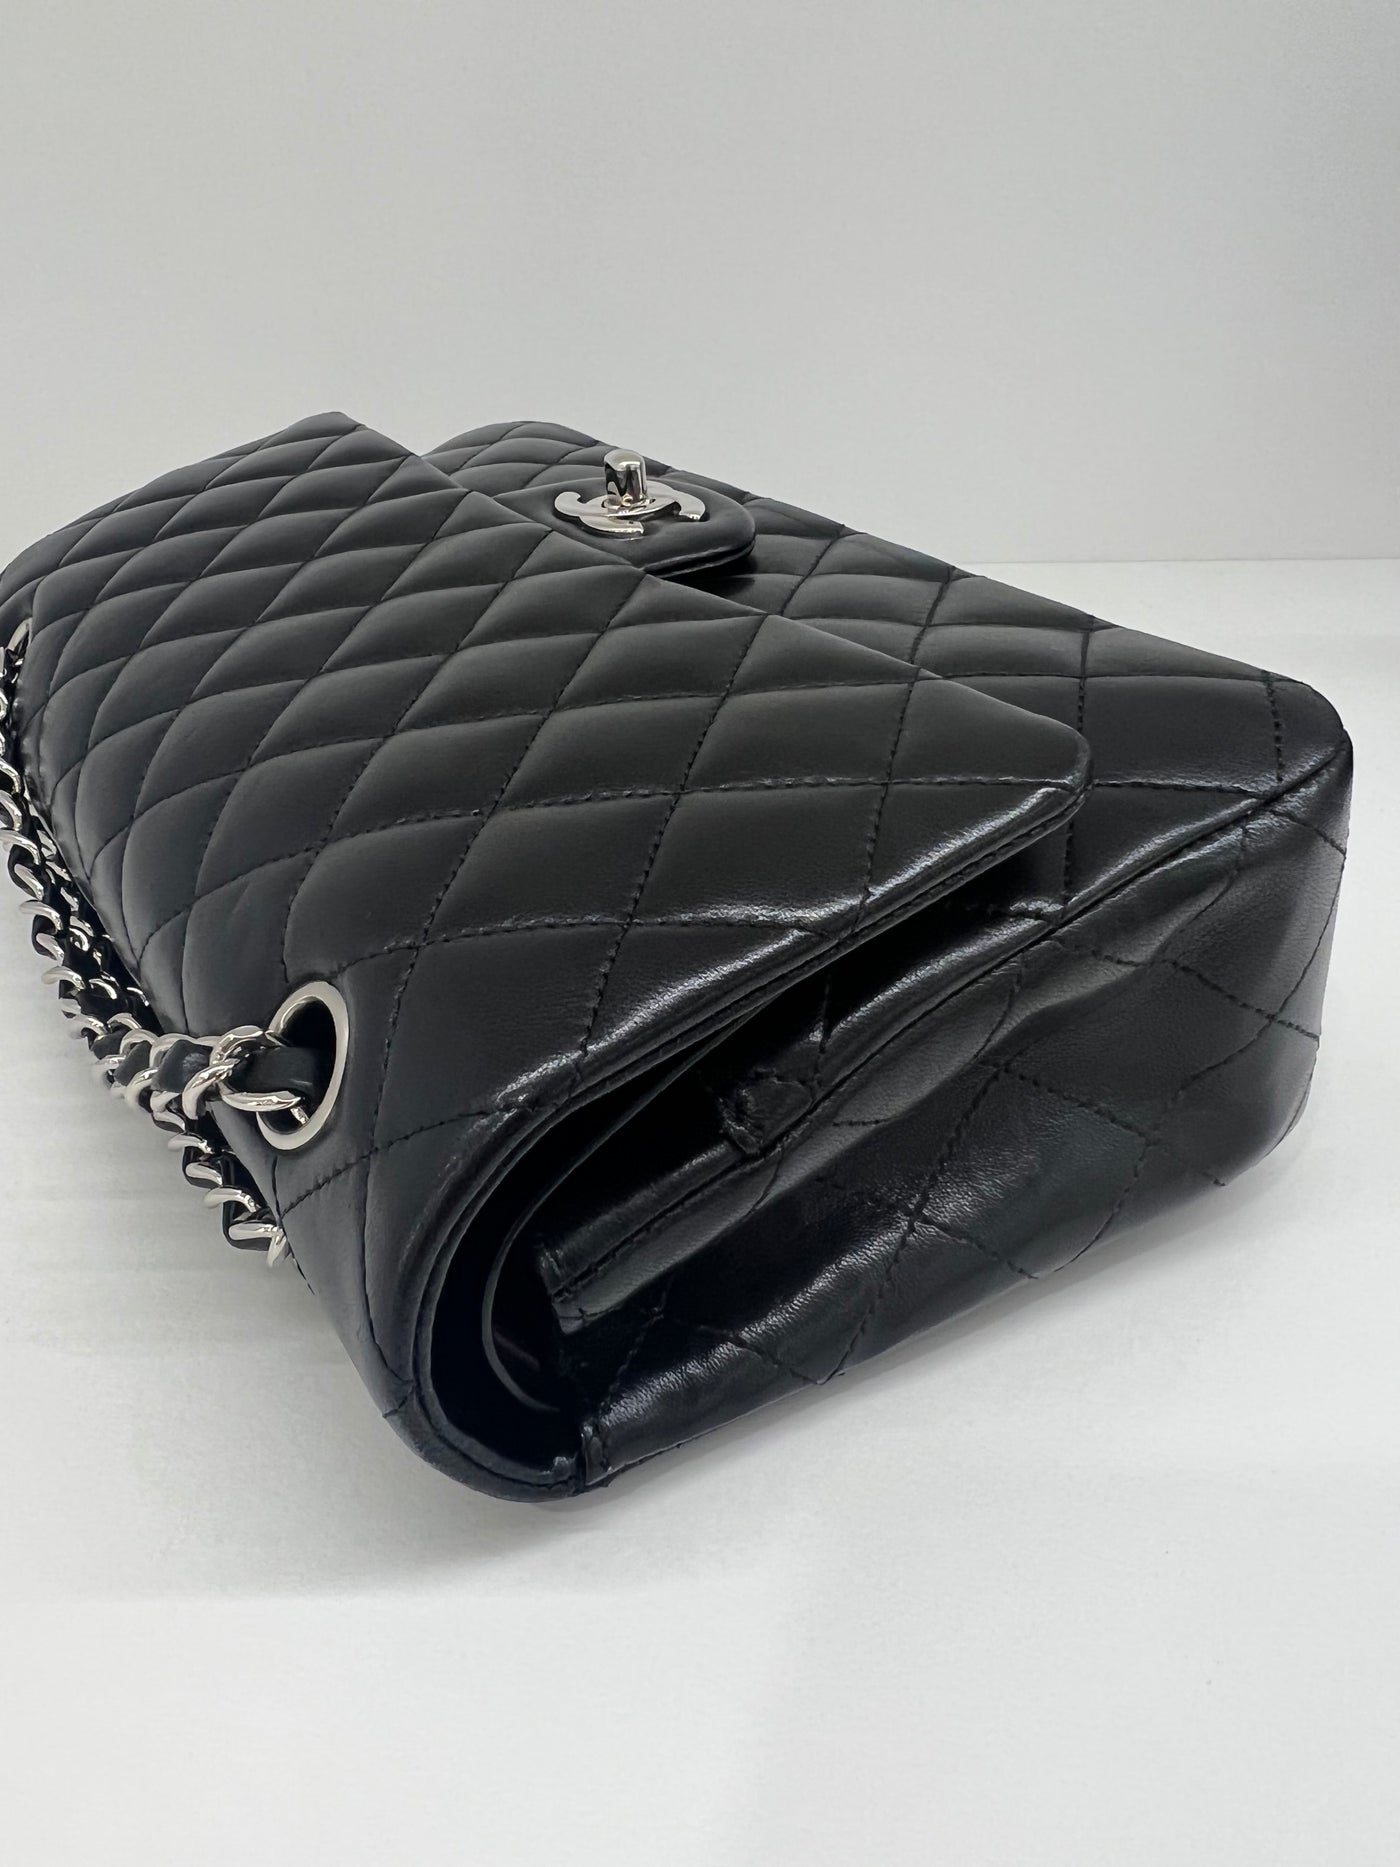 Chanel Classic Flap Medium - Black SHW - SOLD